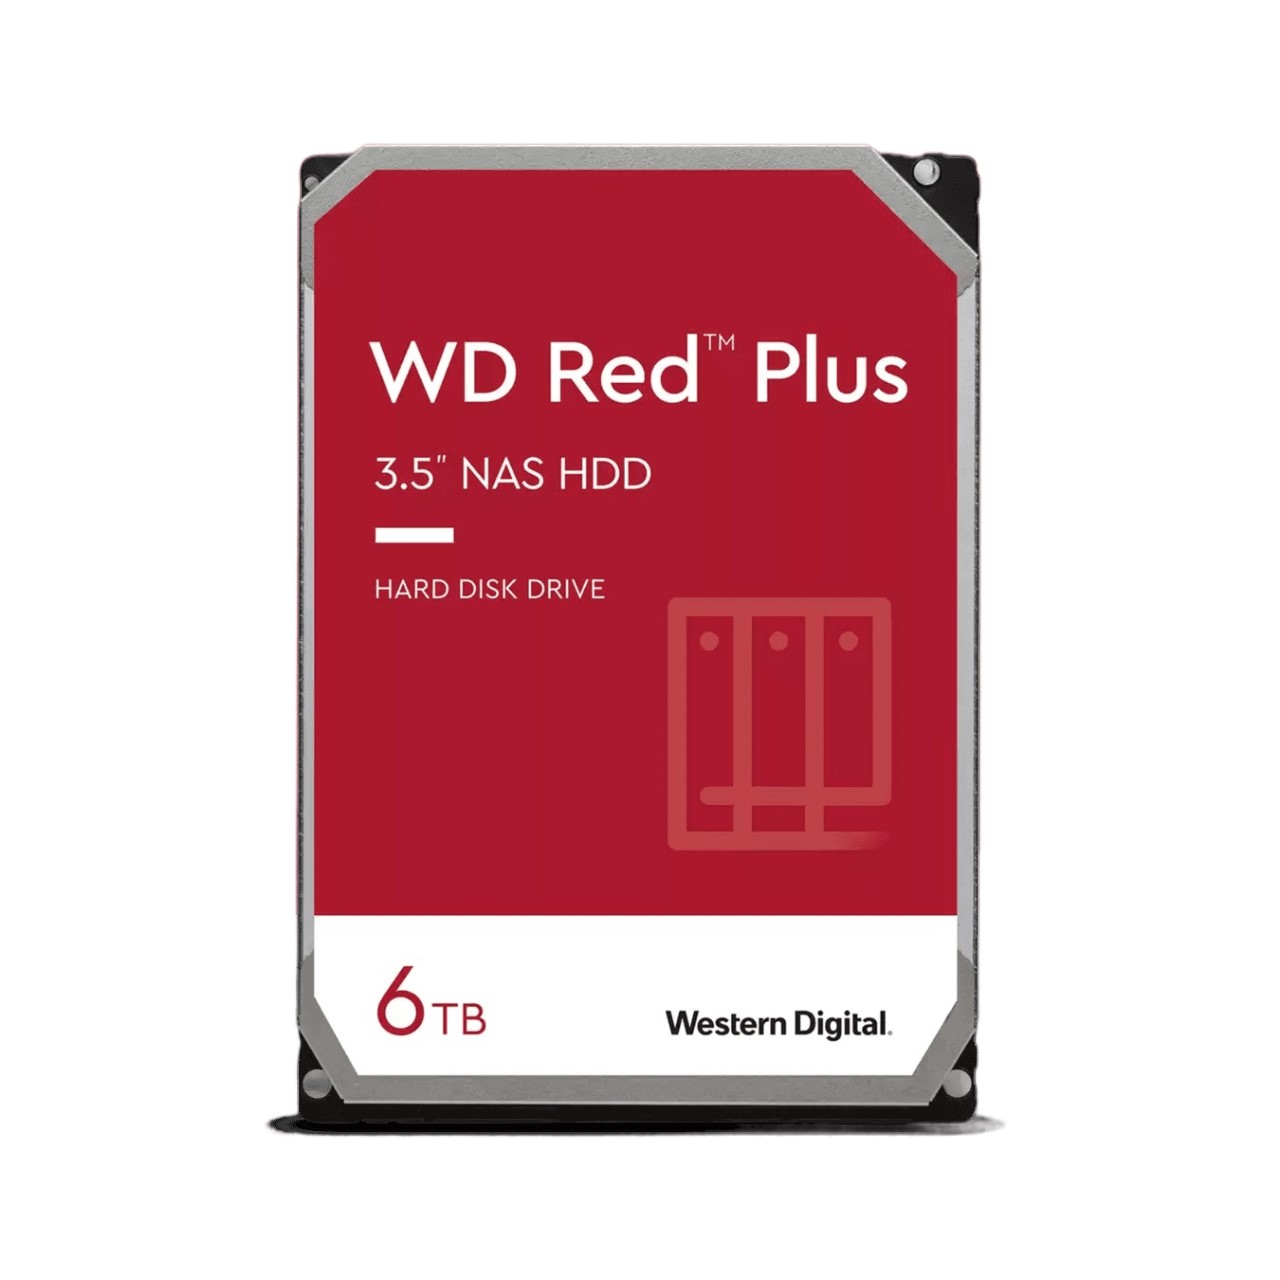 Western Digital Red Plus 3.5インチ内蔵HDD6TB WD60EFPX[6TB  5400]＜メーカー3年保証＞｜パソコン・スマートフォン・デジタル機器販売のPC DEPOT(ピーシーデポ)WEBSHOP